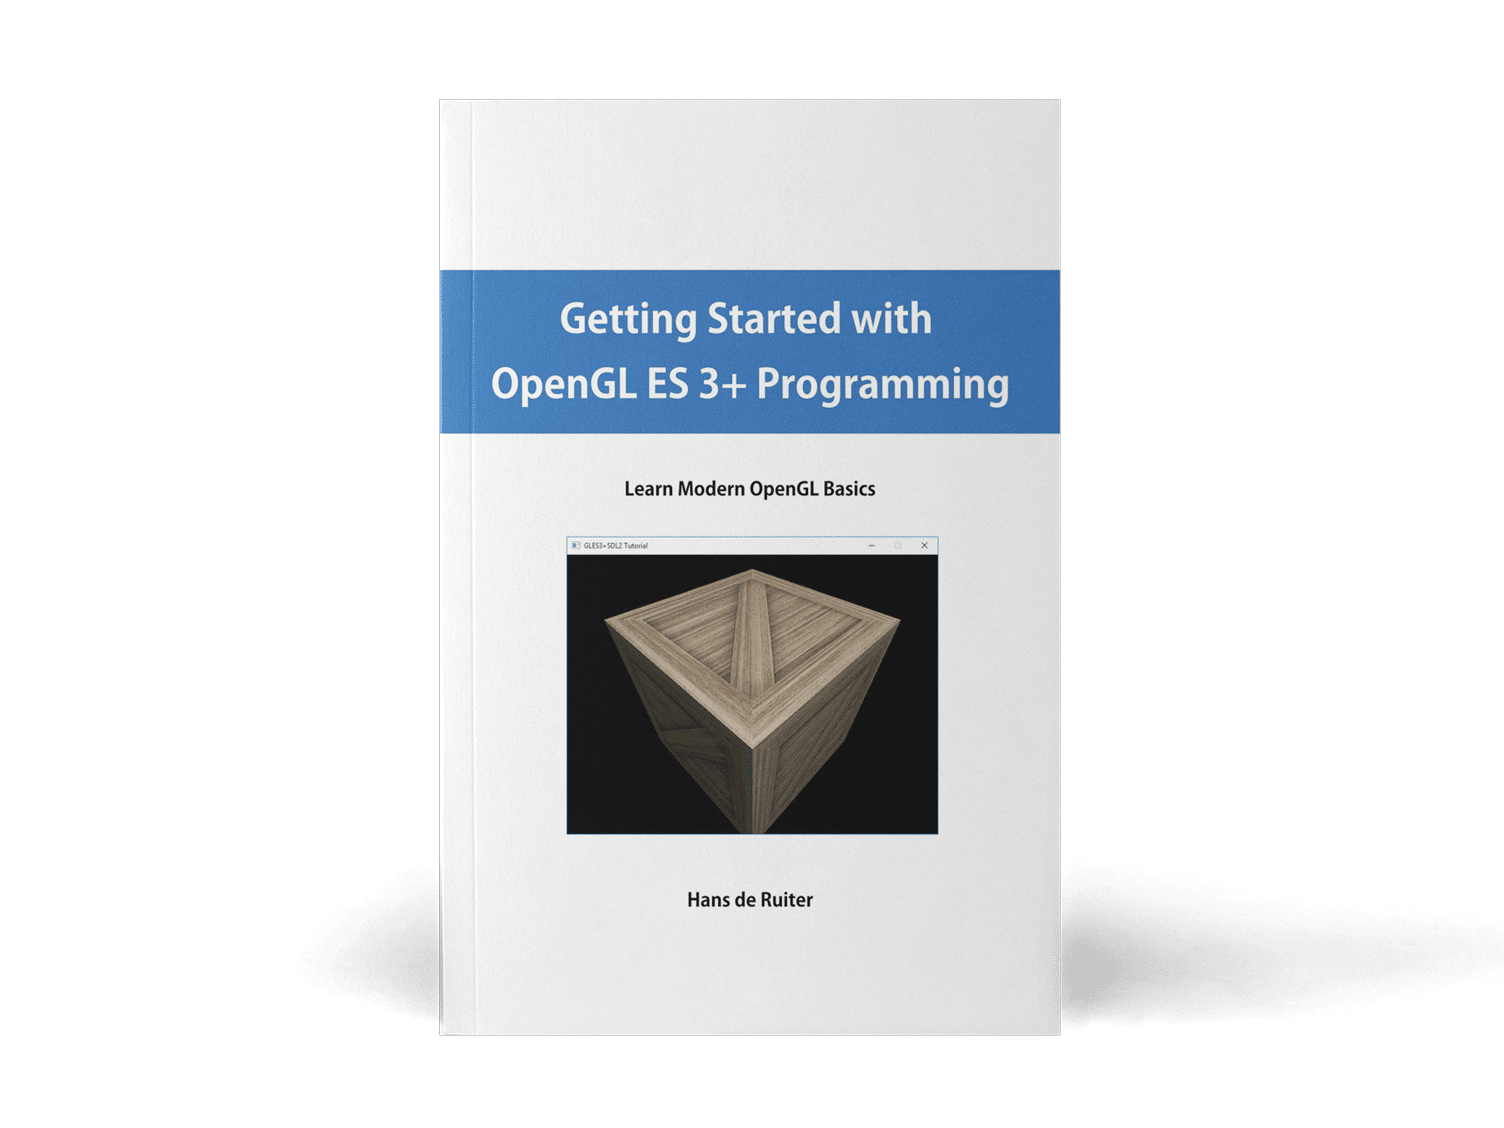 opengl es 2.0 merge framebuffer object